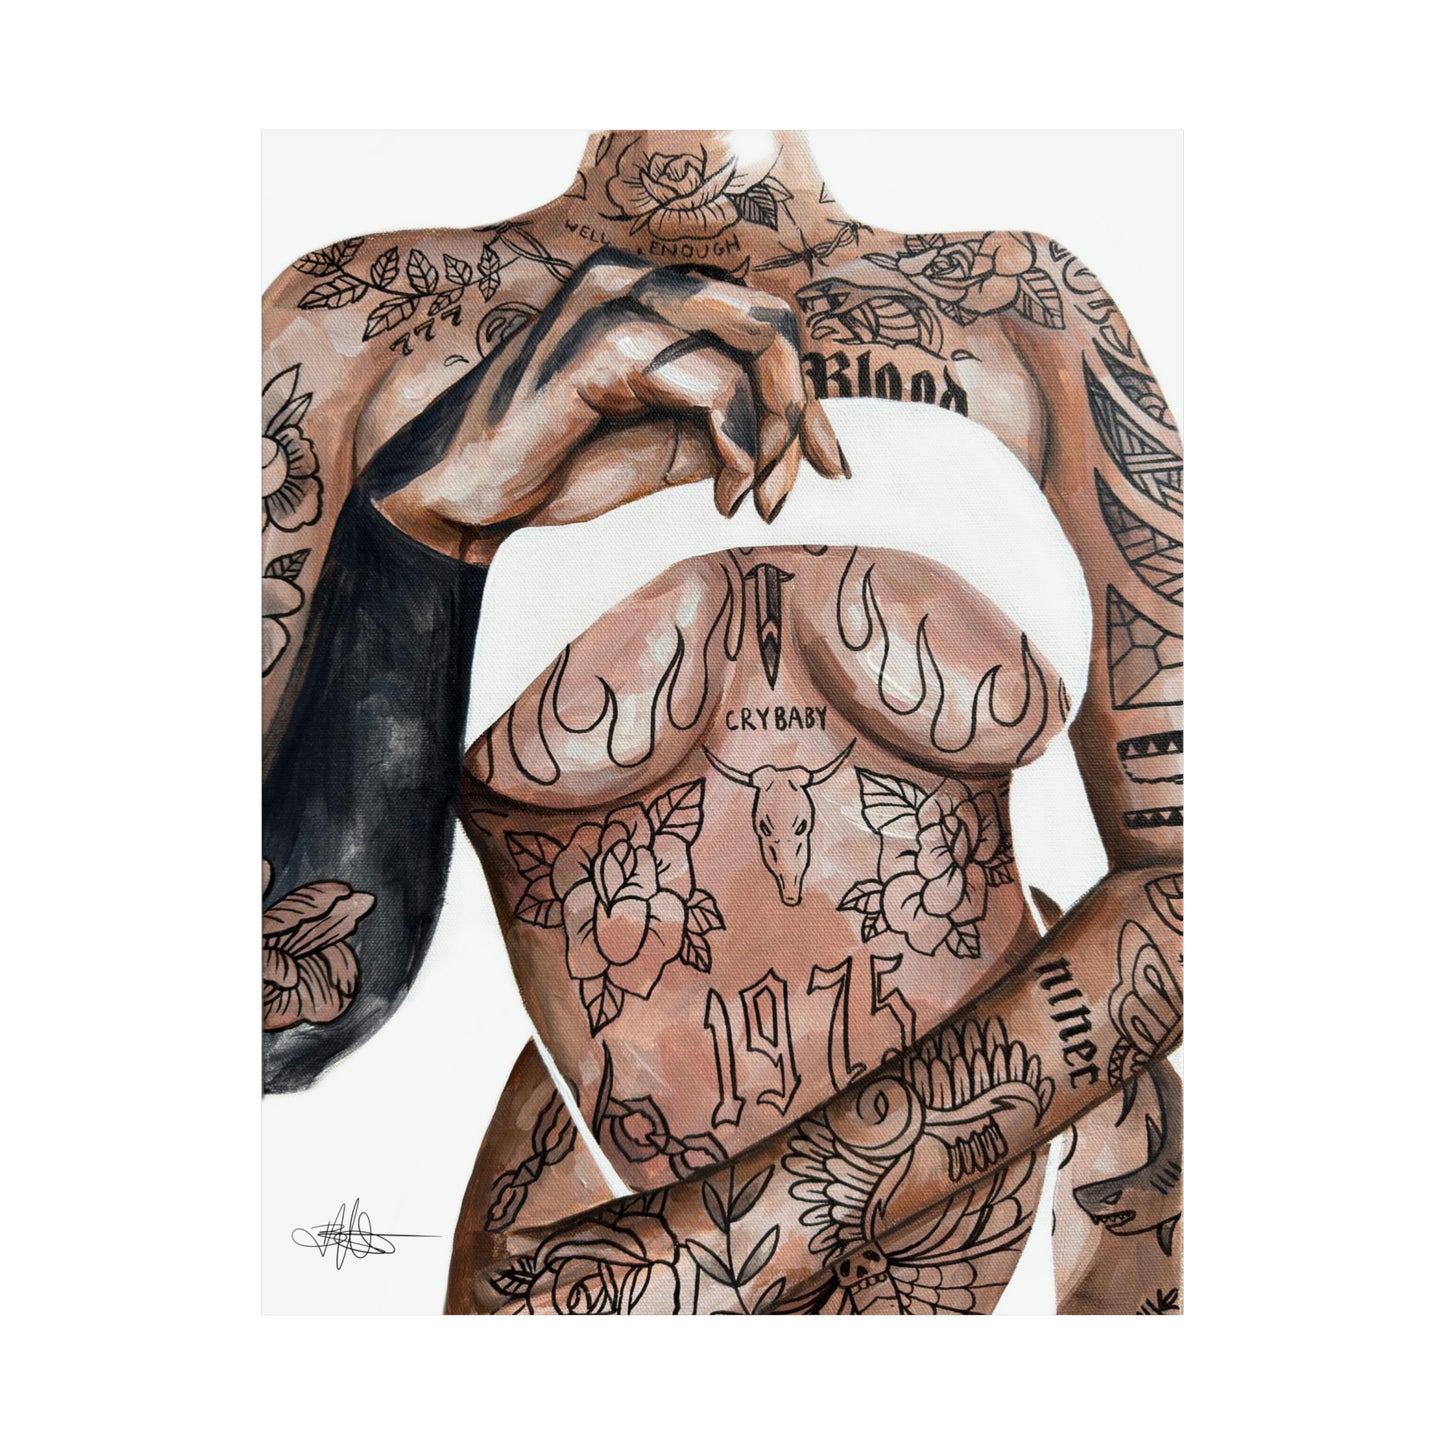 Tattooed Matte Poster